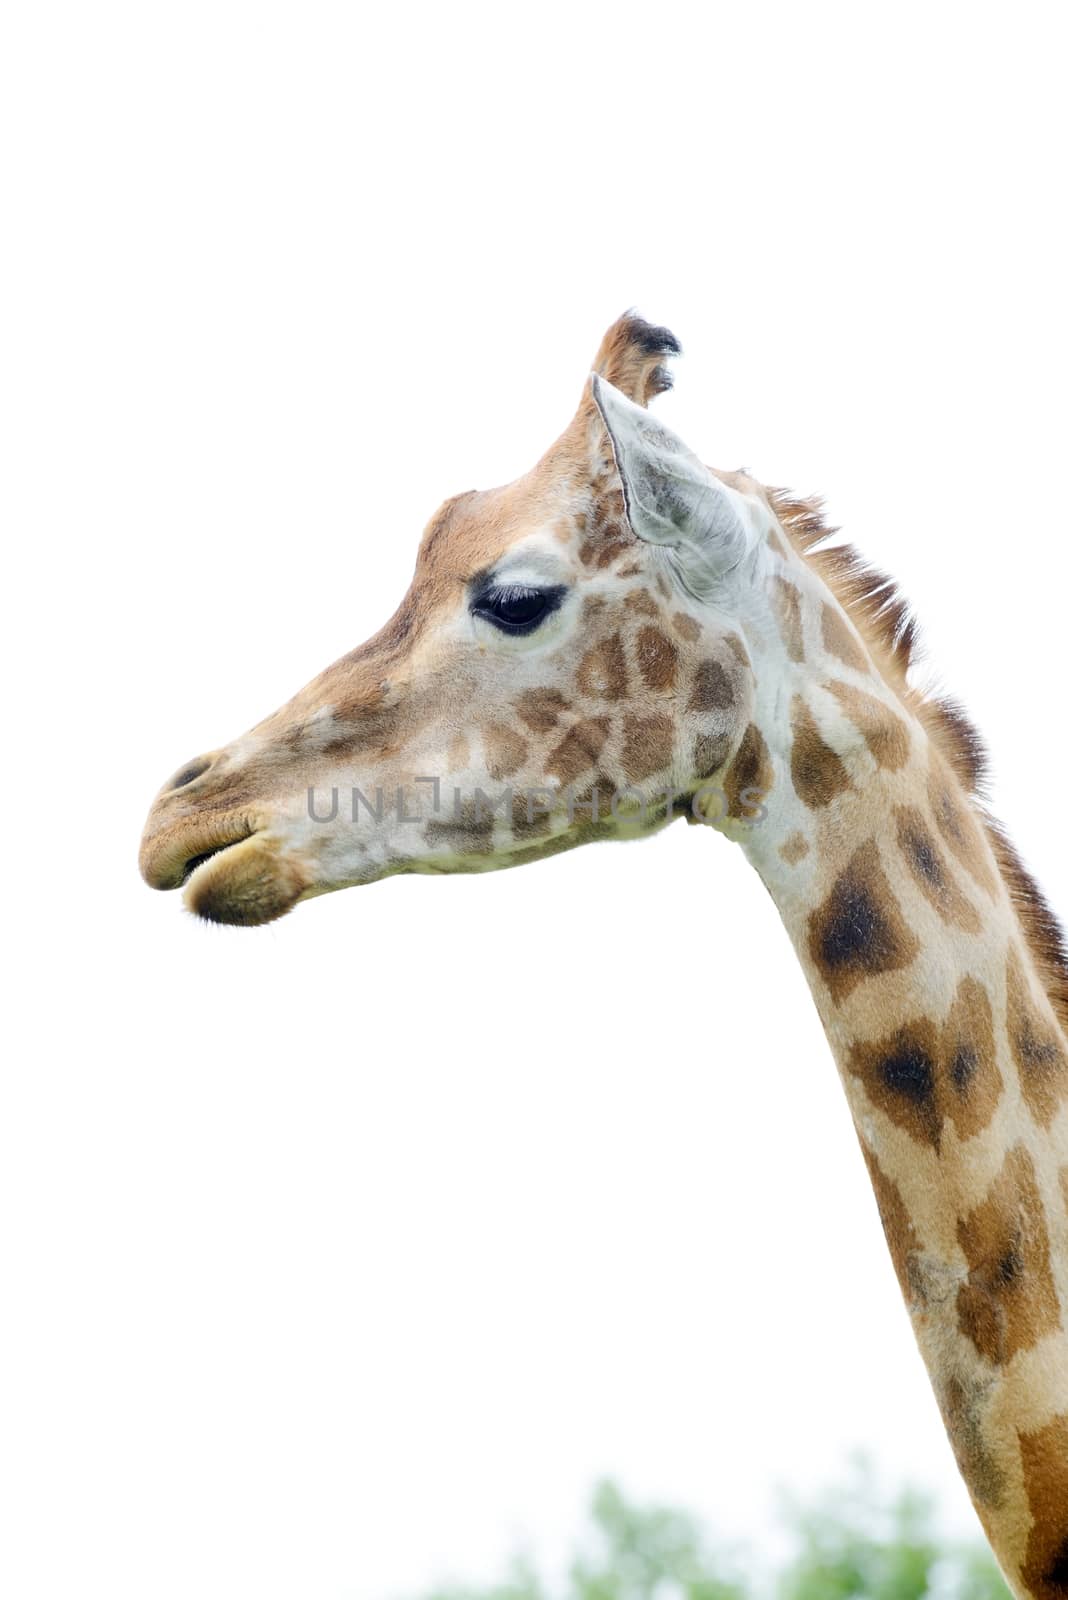 Giraffe profile by kmwphotography